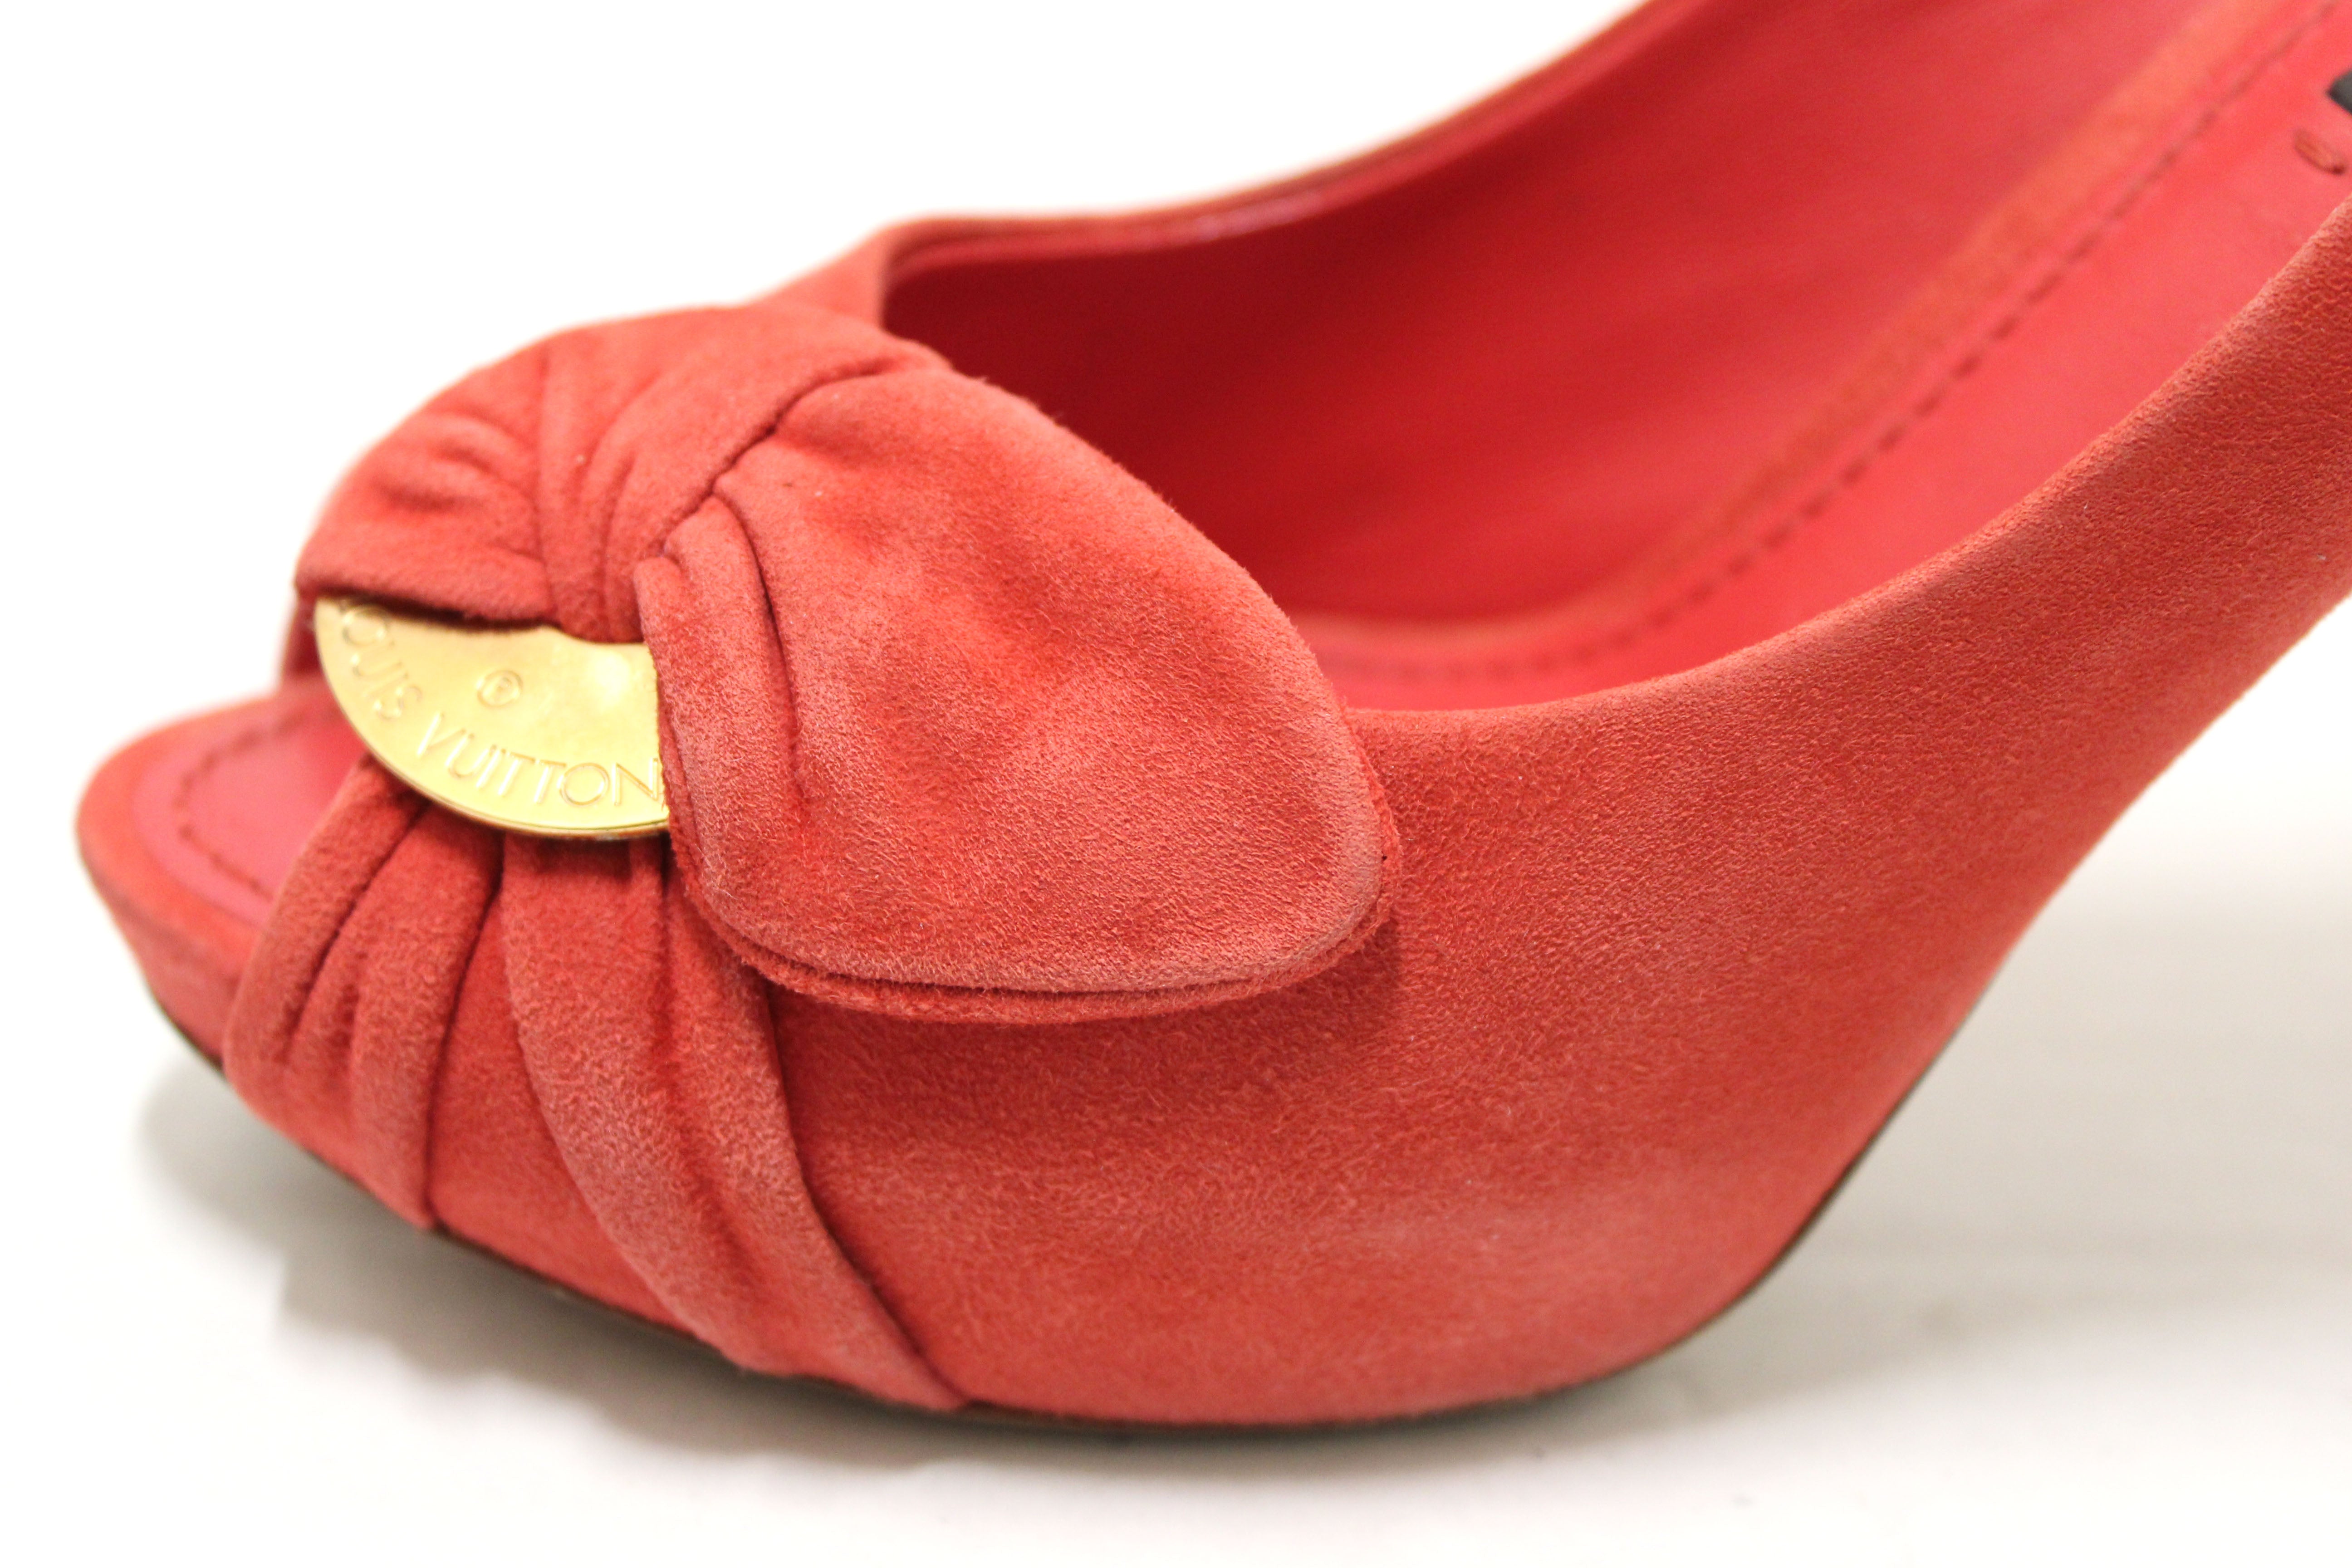 Authentic Louis Vuitton Red Suede Leather Pumps Shoes Size 37